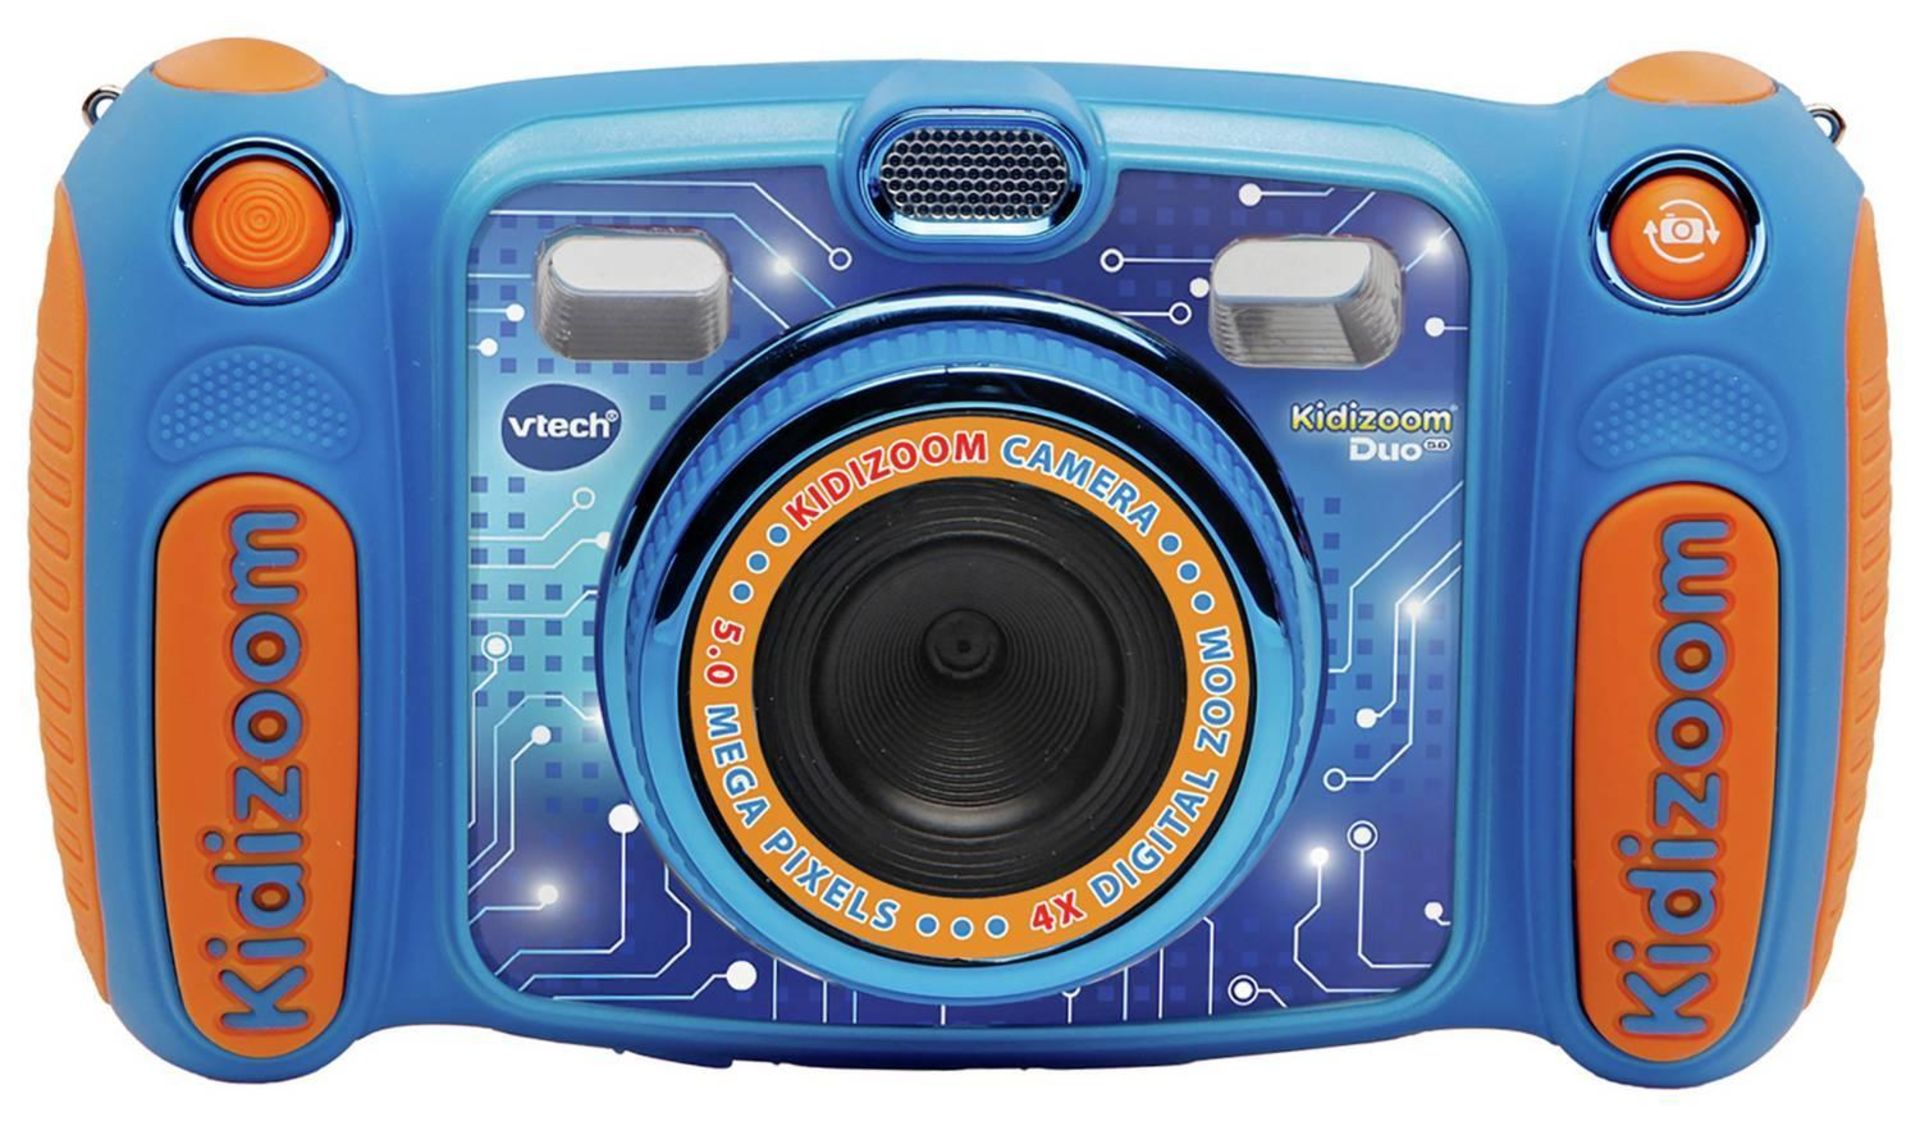 VTech Kidizoom 5MP Camera - Blue, £45.00 RRP